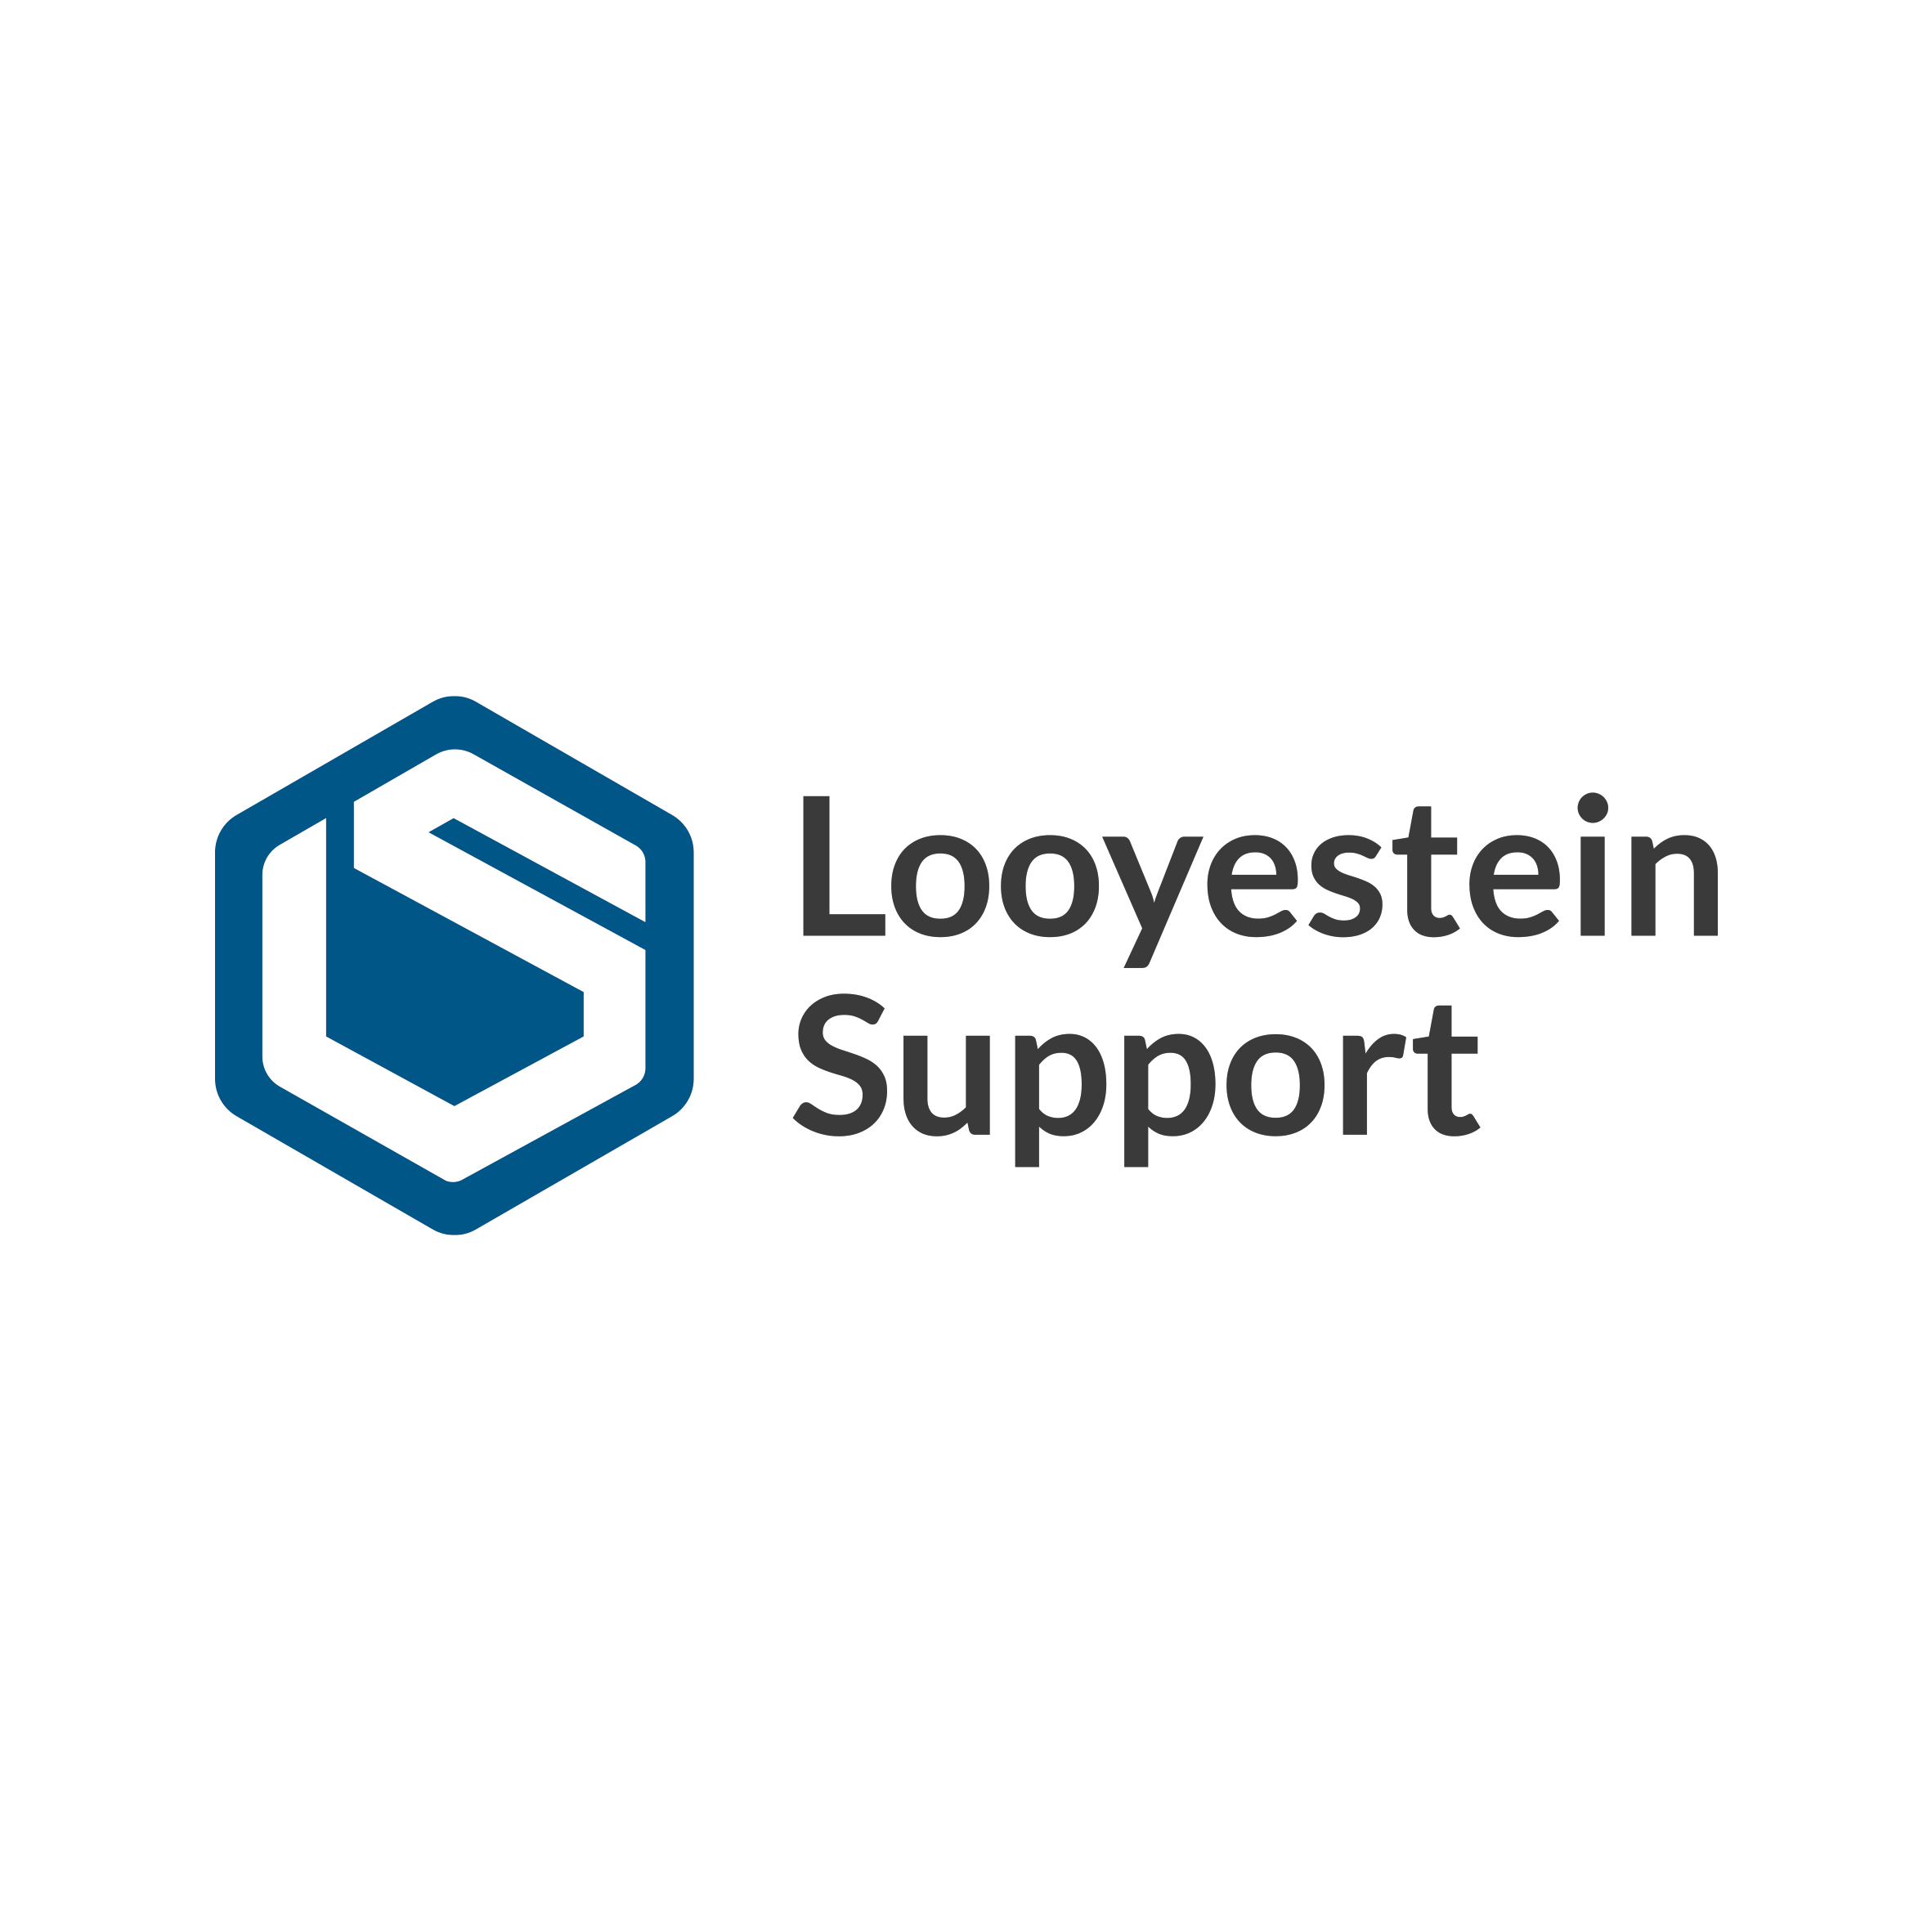 Looyestein Support